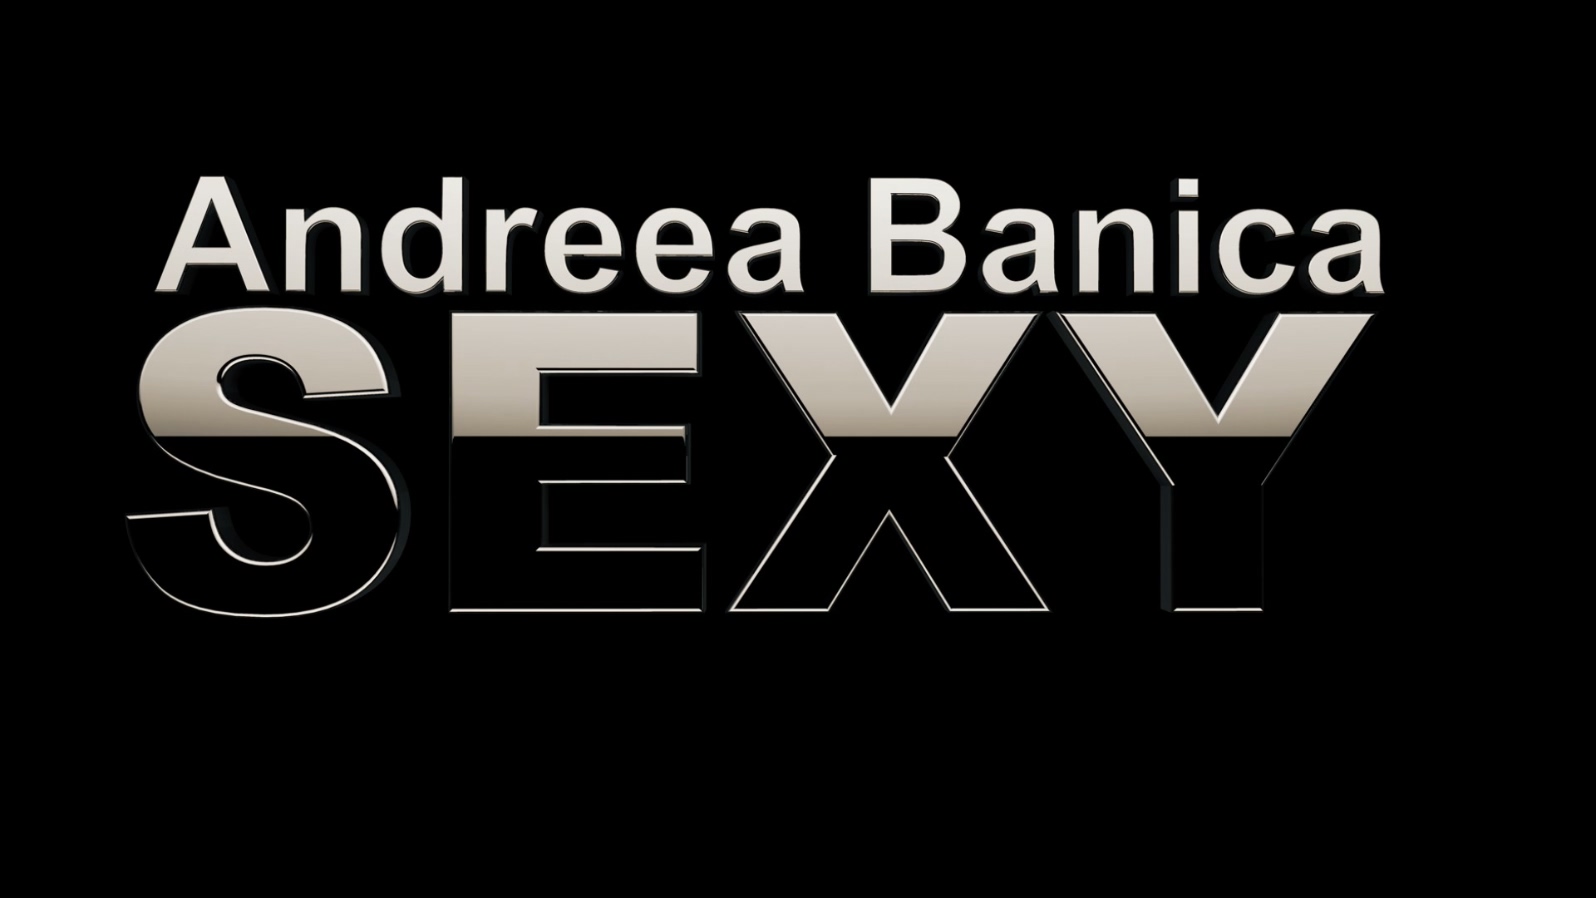 Andreea Banica - Sexy (LPCM-Master-Clean) - 1080P